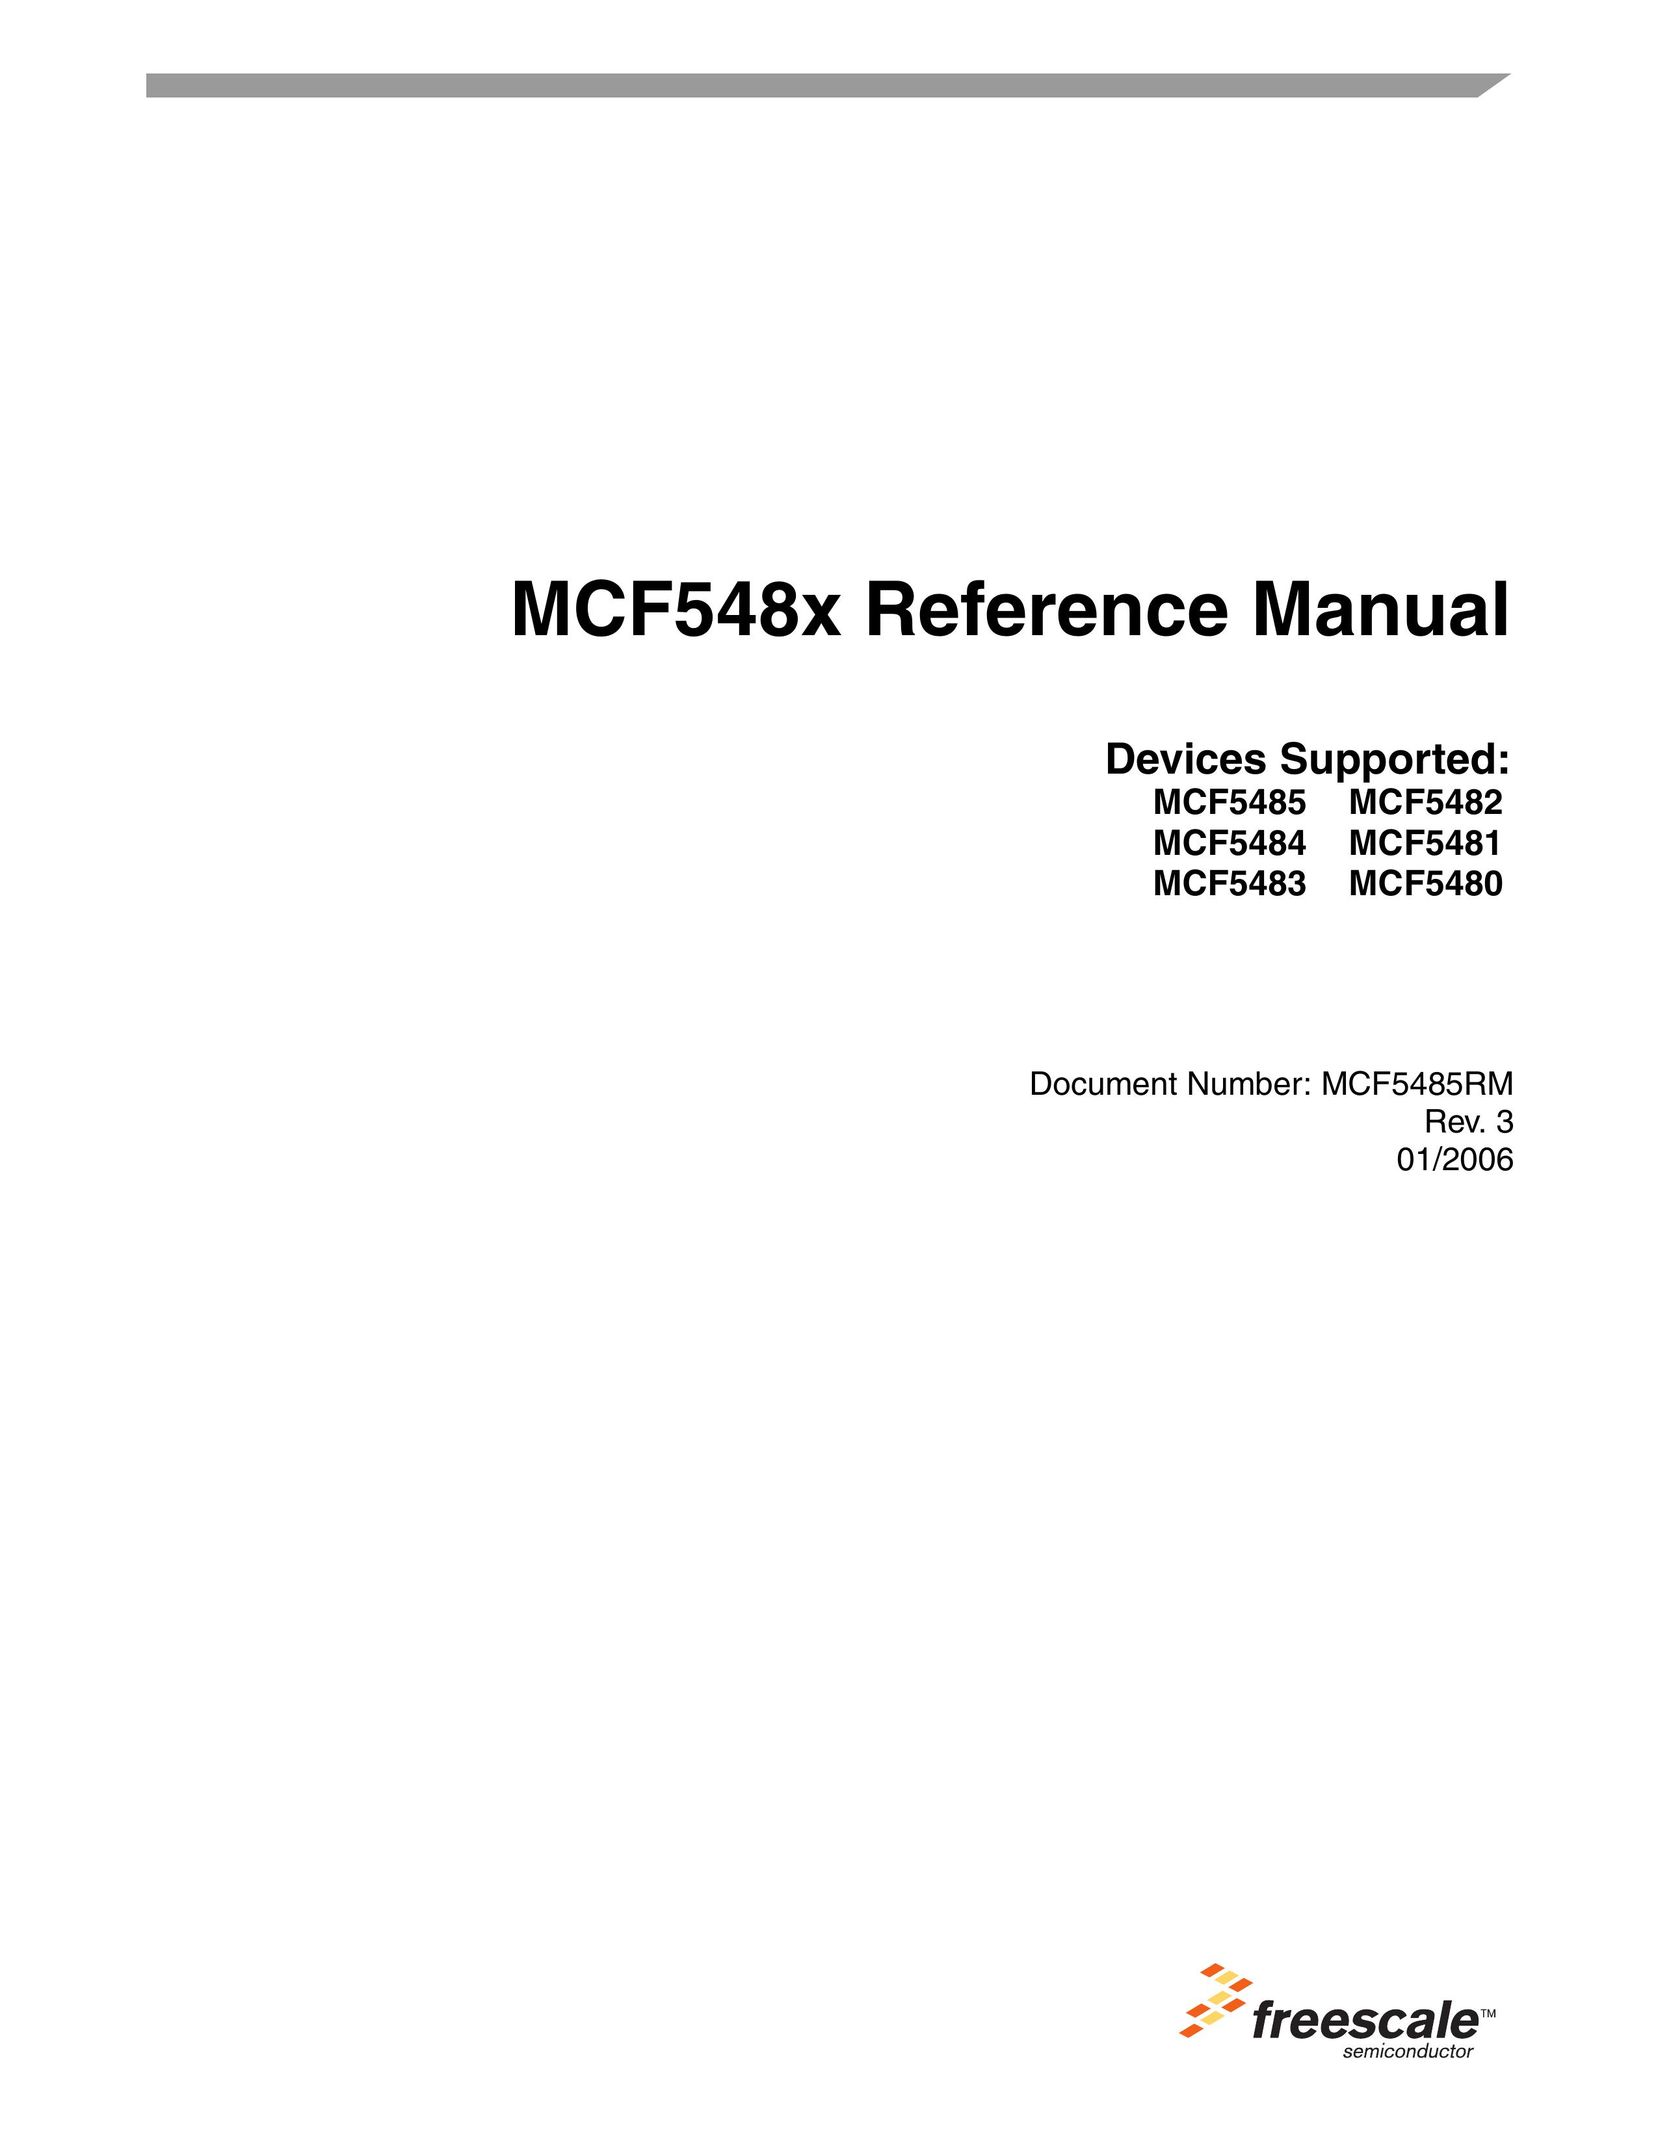 Freescale Semiconductor MCF5480 Computer Hardware User Manual